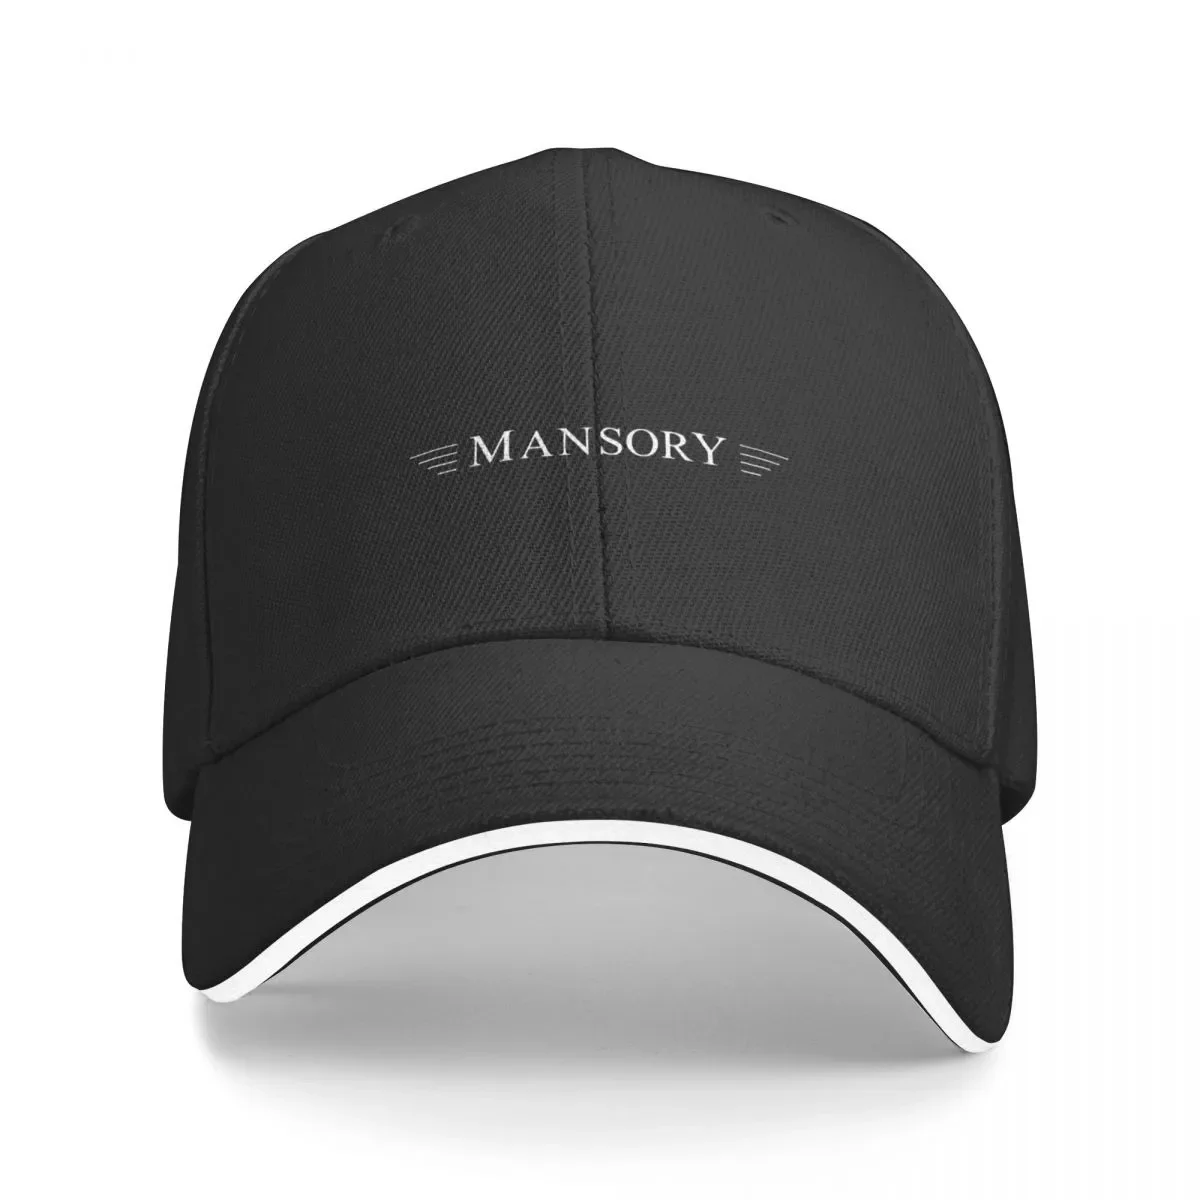 

New BEST SELLER - Mansory Merchandise Cap Baseball Cap sports caps Cap male fishing hat Woman hats Men's